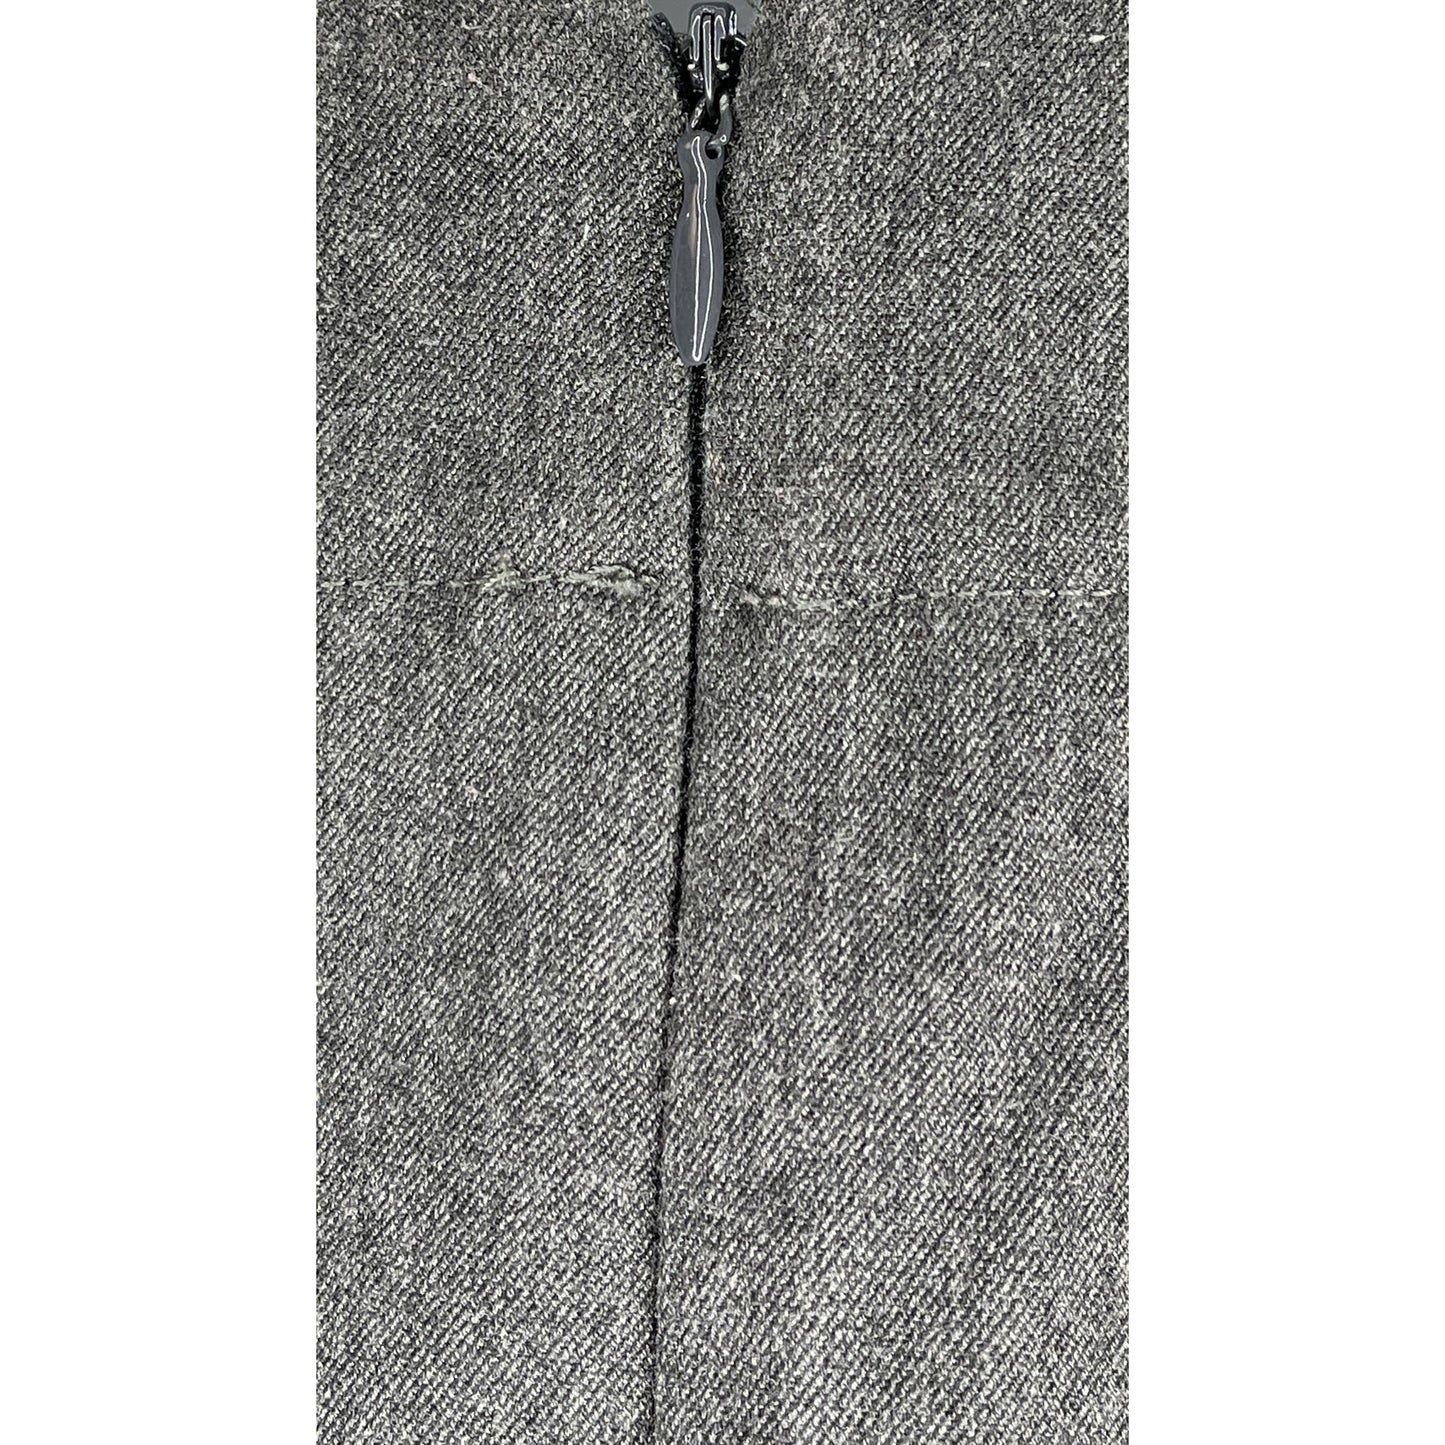 Talbots Dress Pants Side-Zipper Enclosure Gray Size 12P SKU 000416